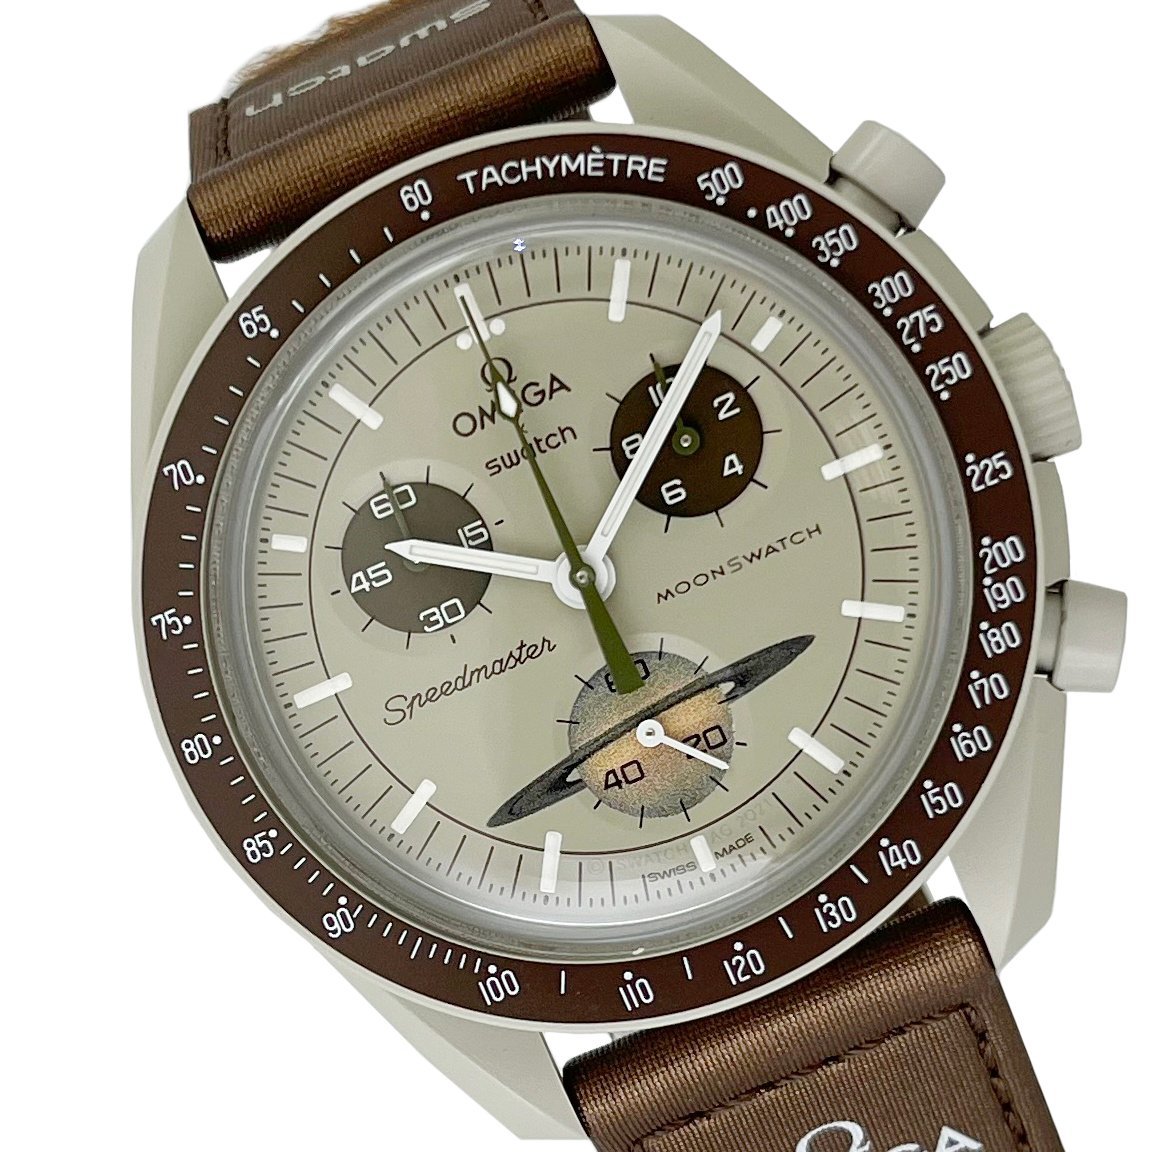  Omega × Swatch OMEGA × Swatch moon часы трансмиссия tu Saturn хронограф кварц б/у мужской женские наручные часы 